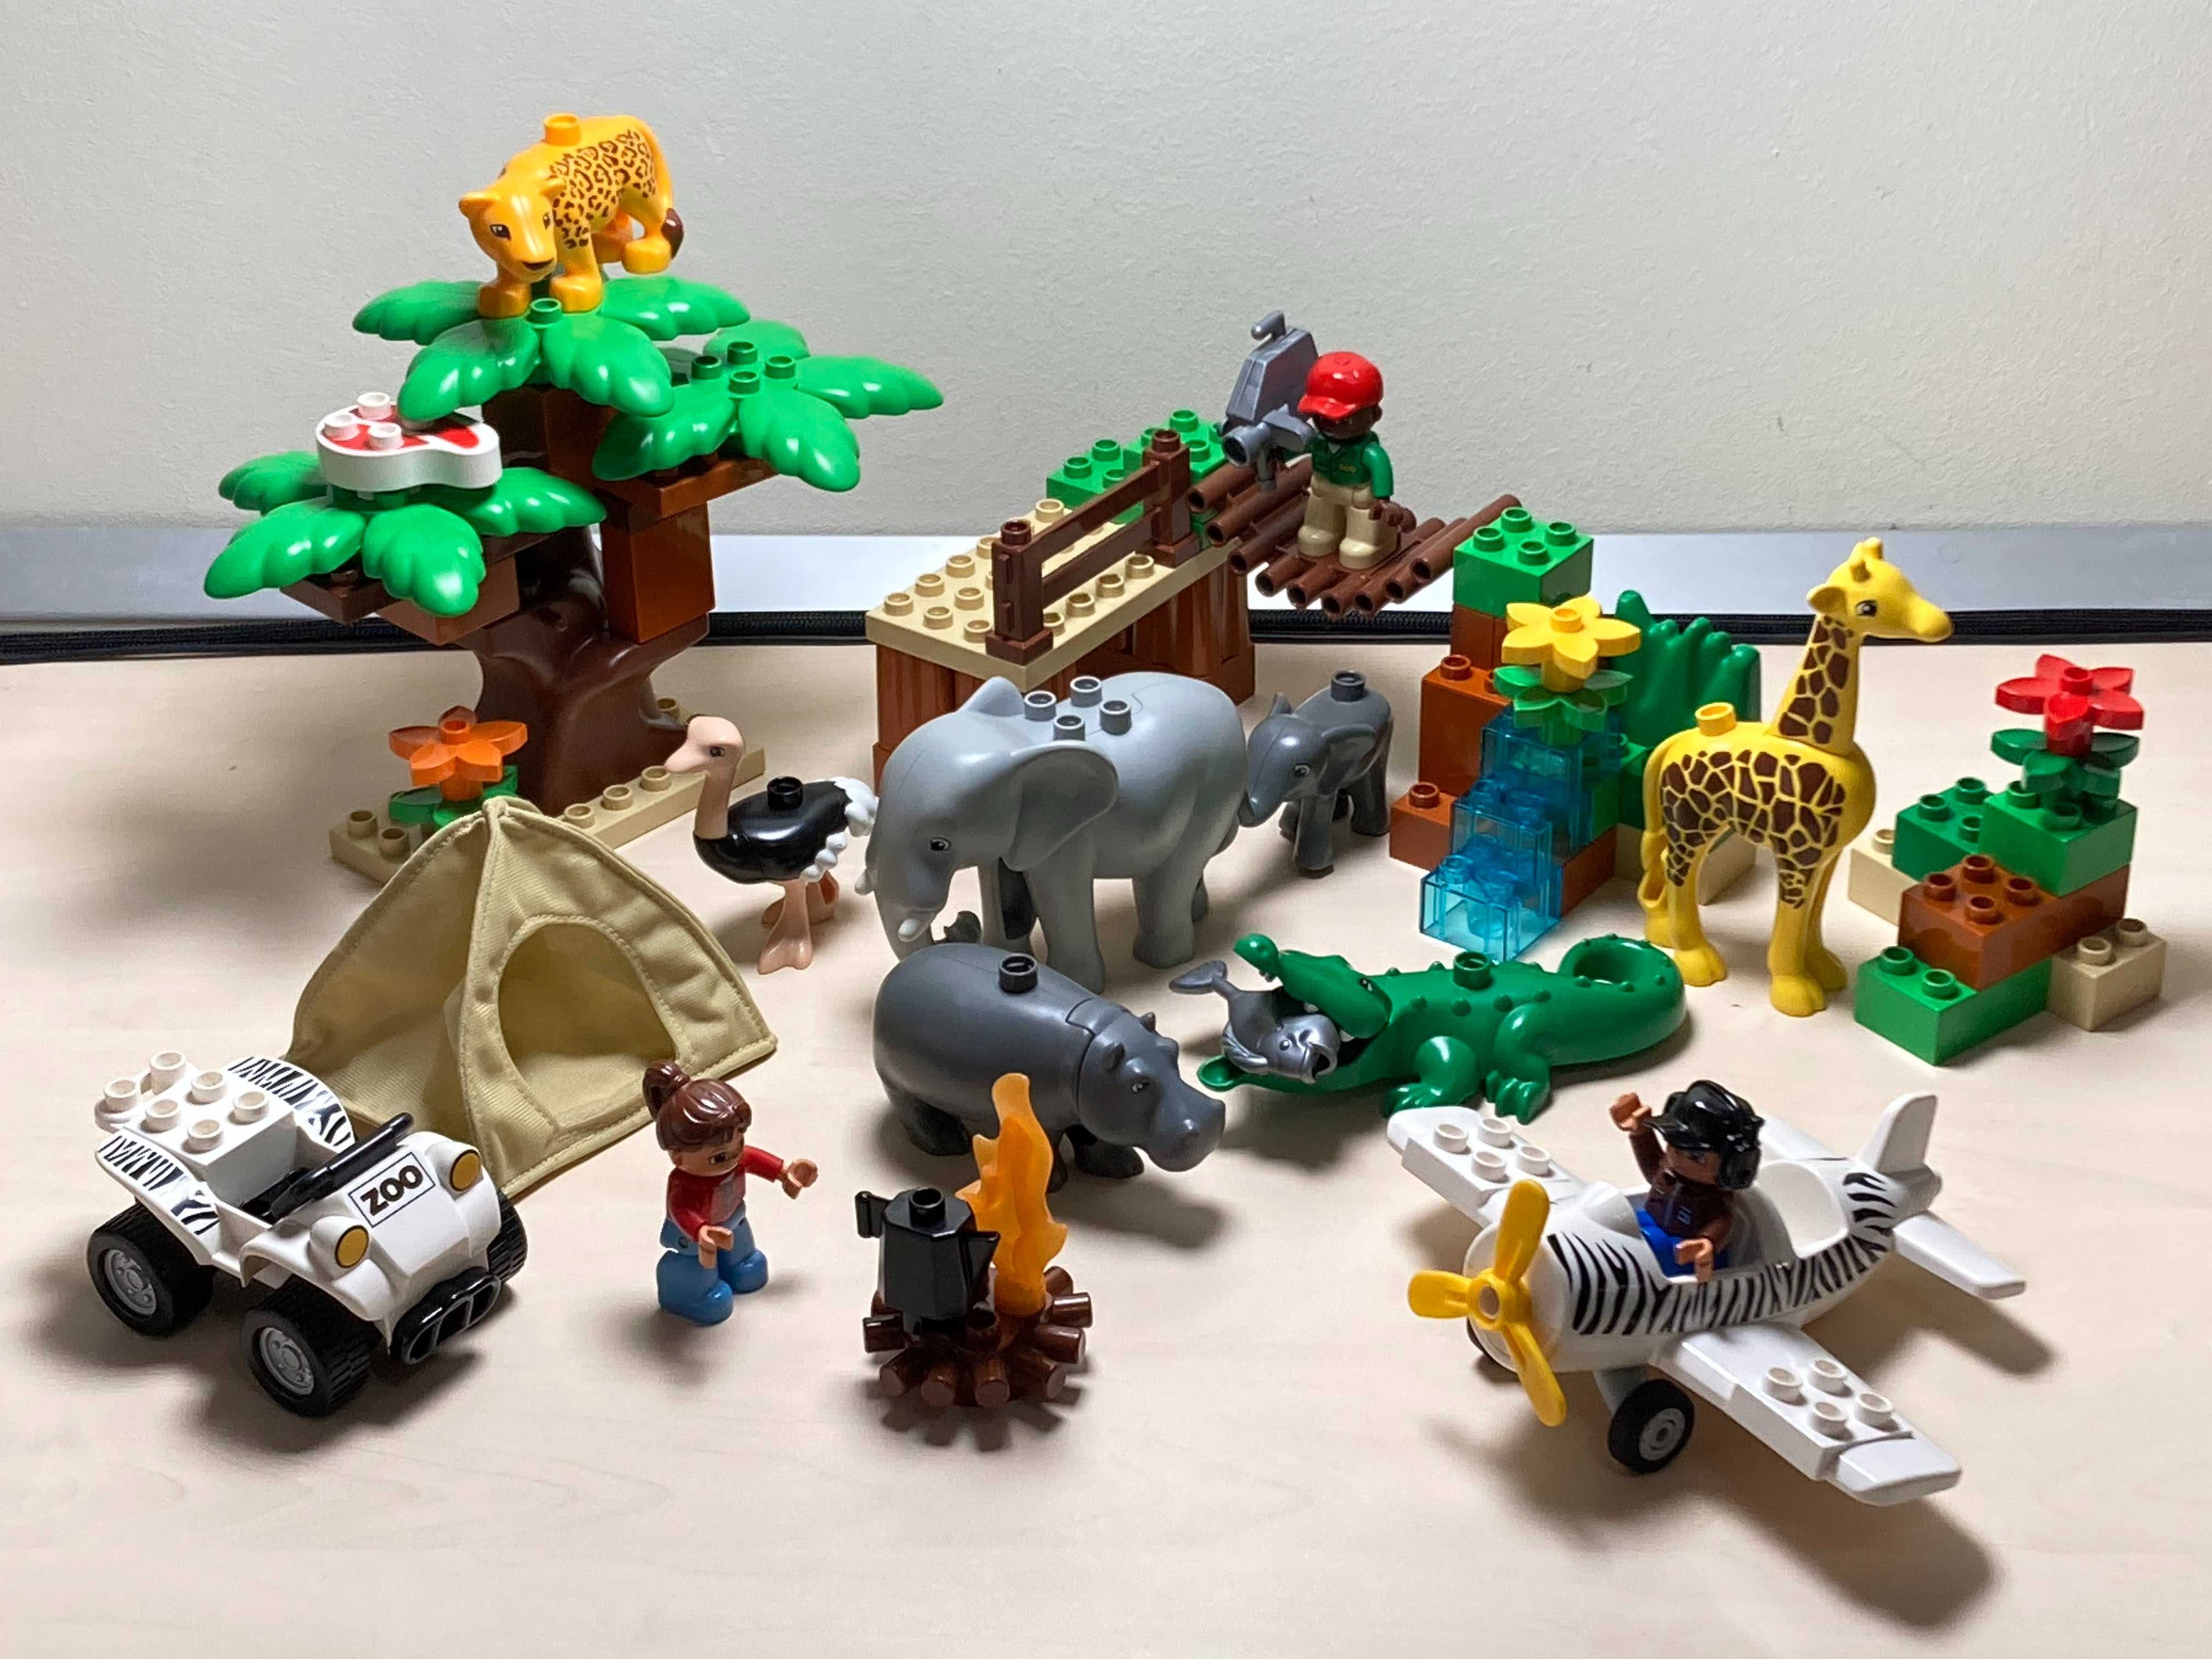 LEGO DUPLO - Photo Safari (6156) cu Animale